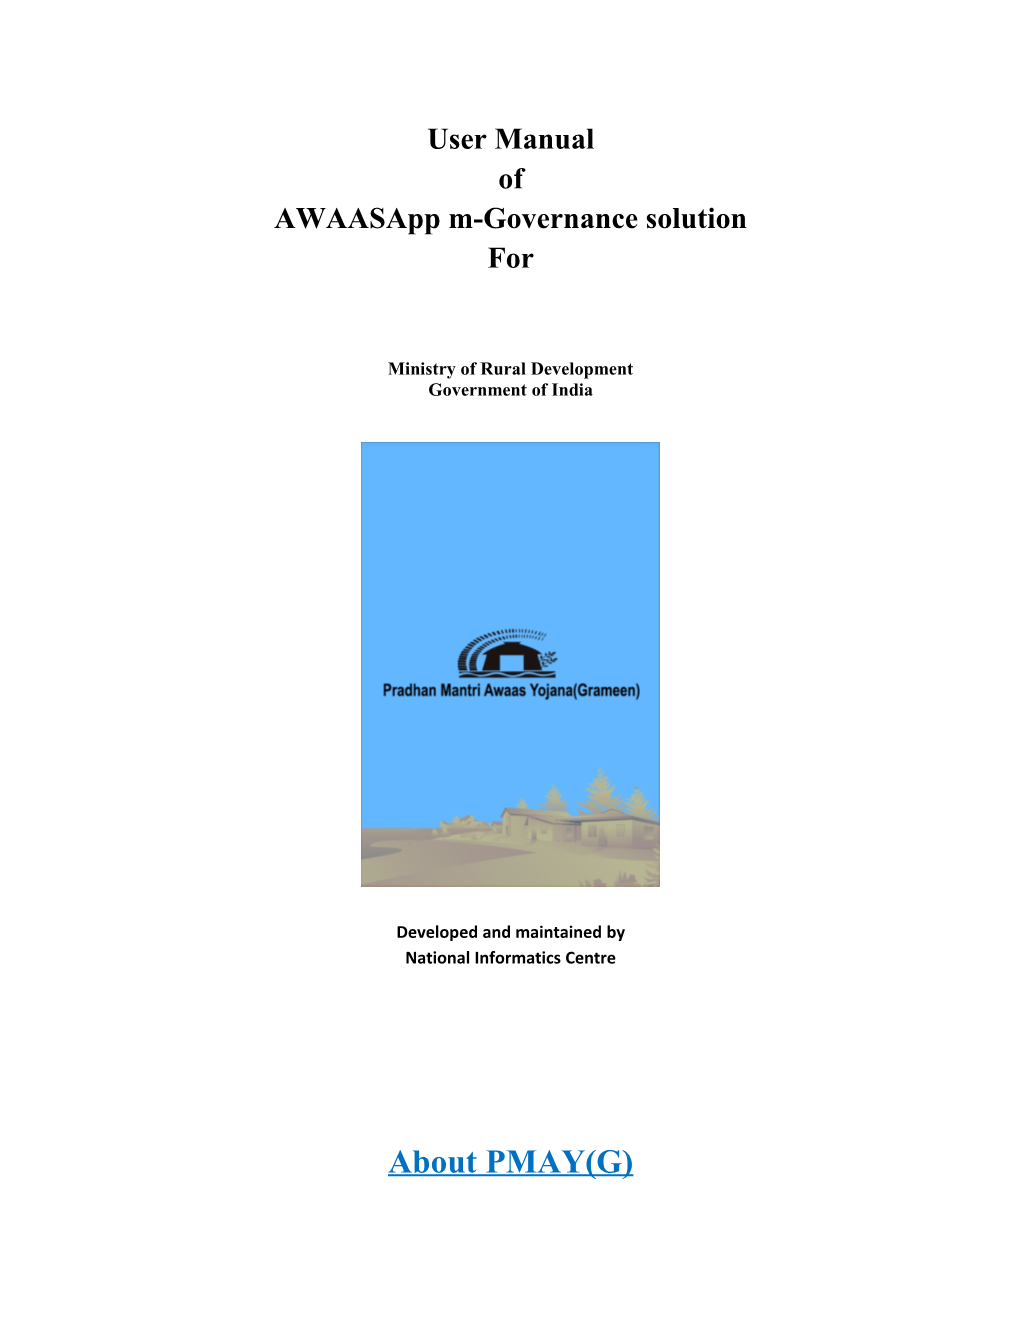 Awaasapp M-Governance Solution